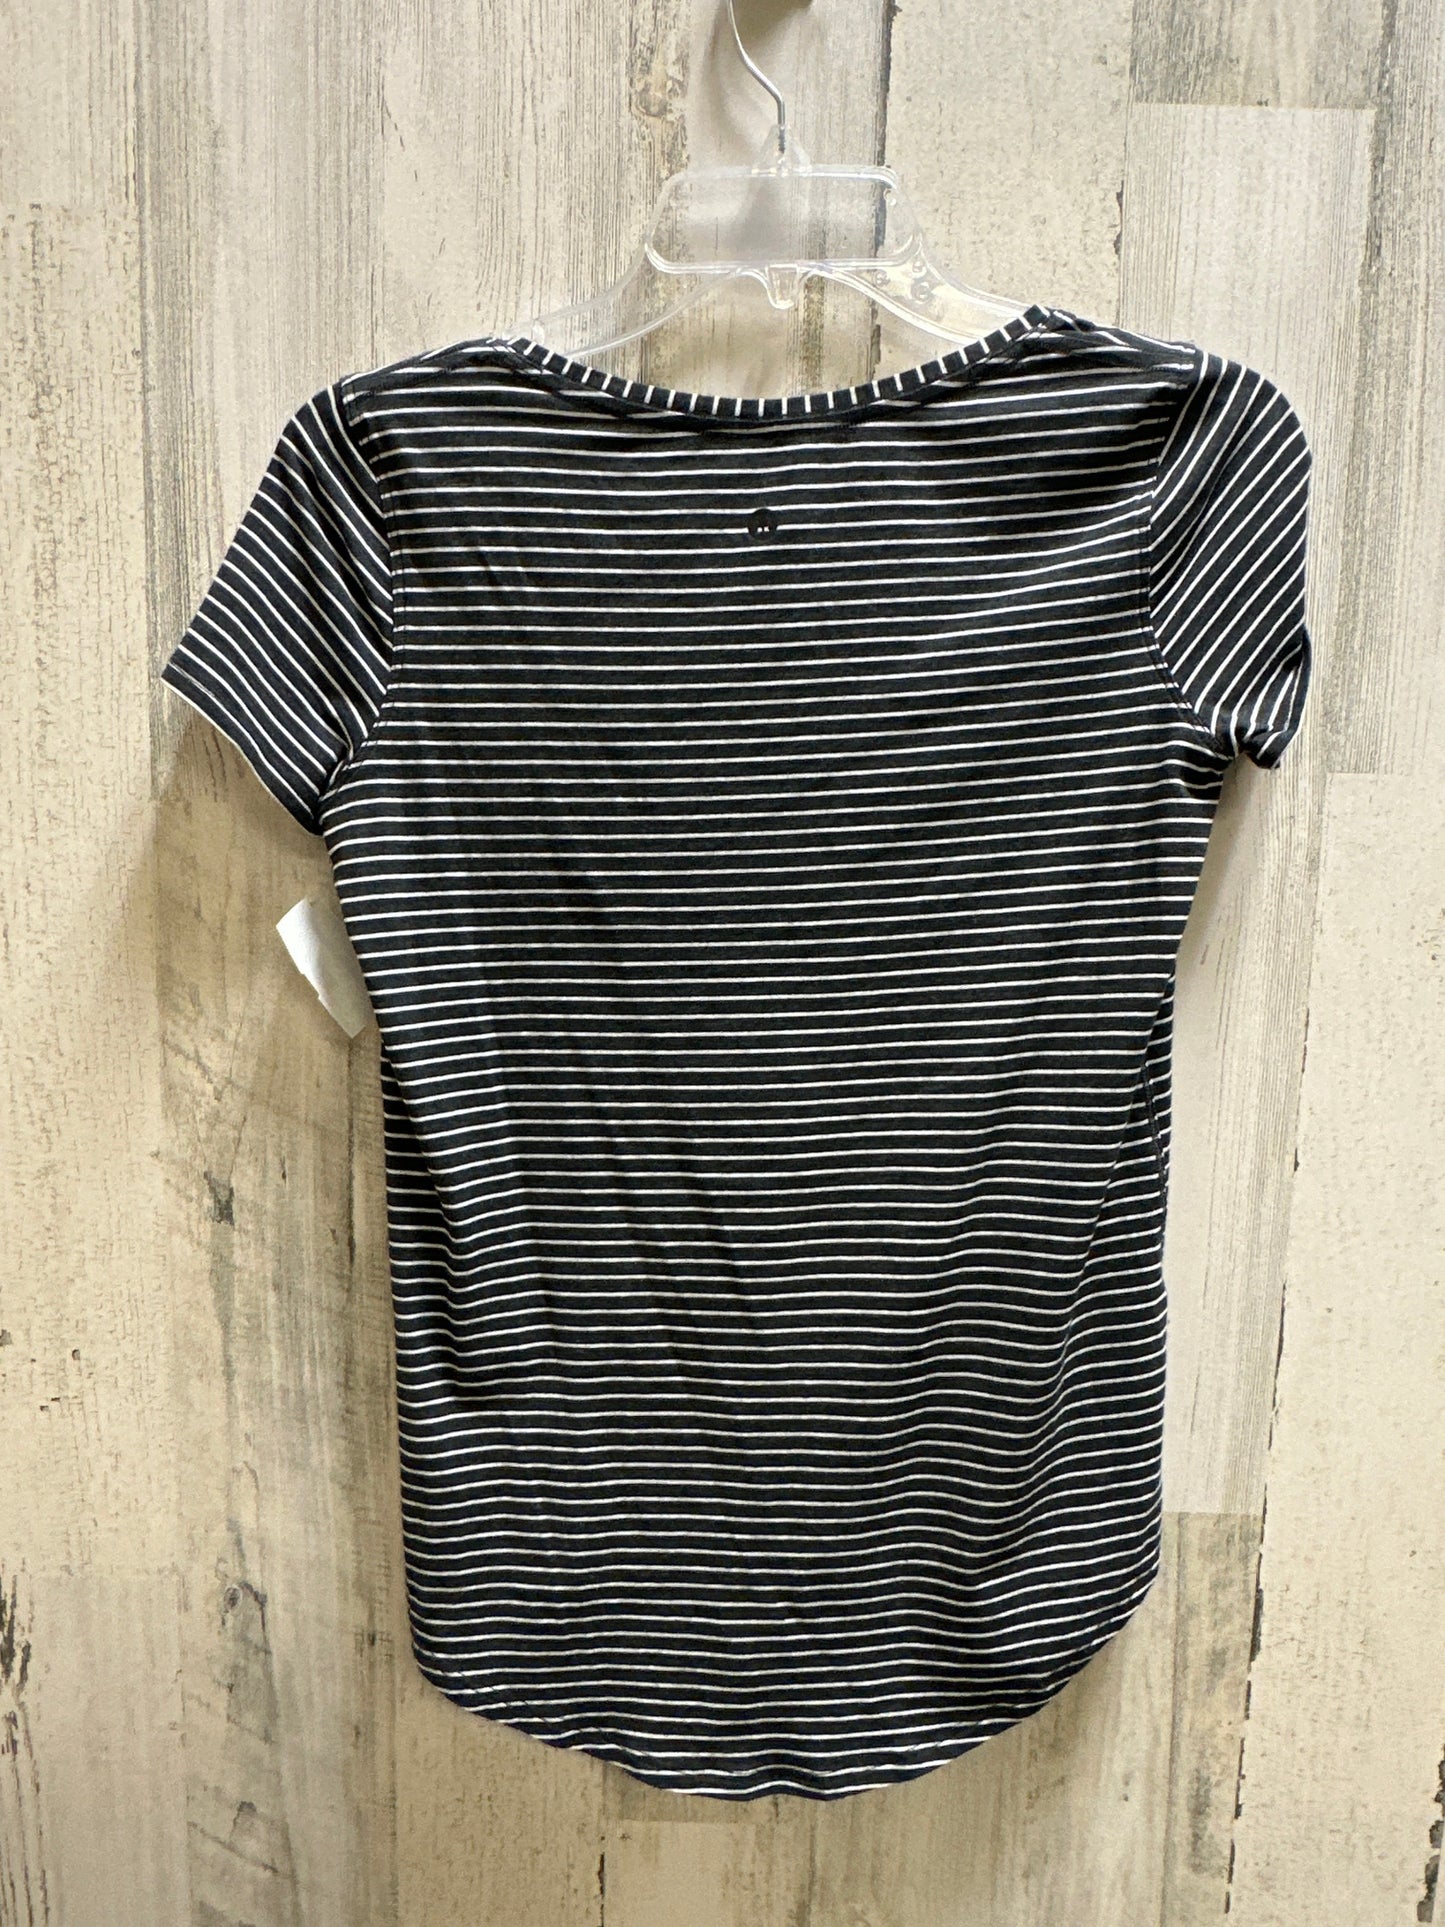 Striped Pattern Athletic Top Short Sleeve Lululemon, Size S